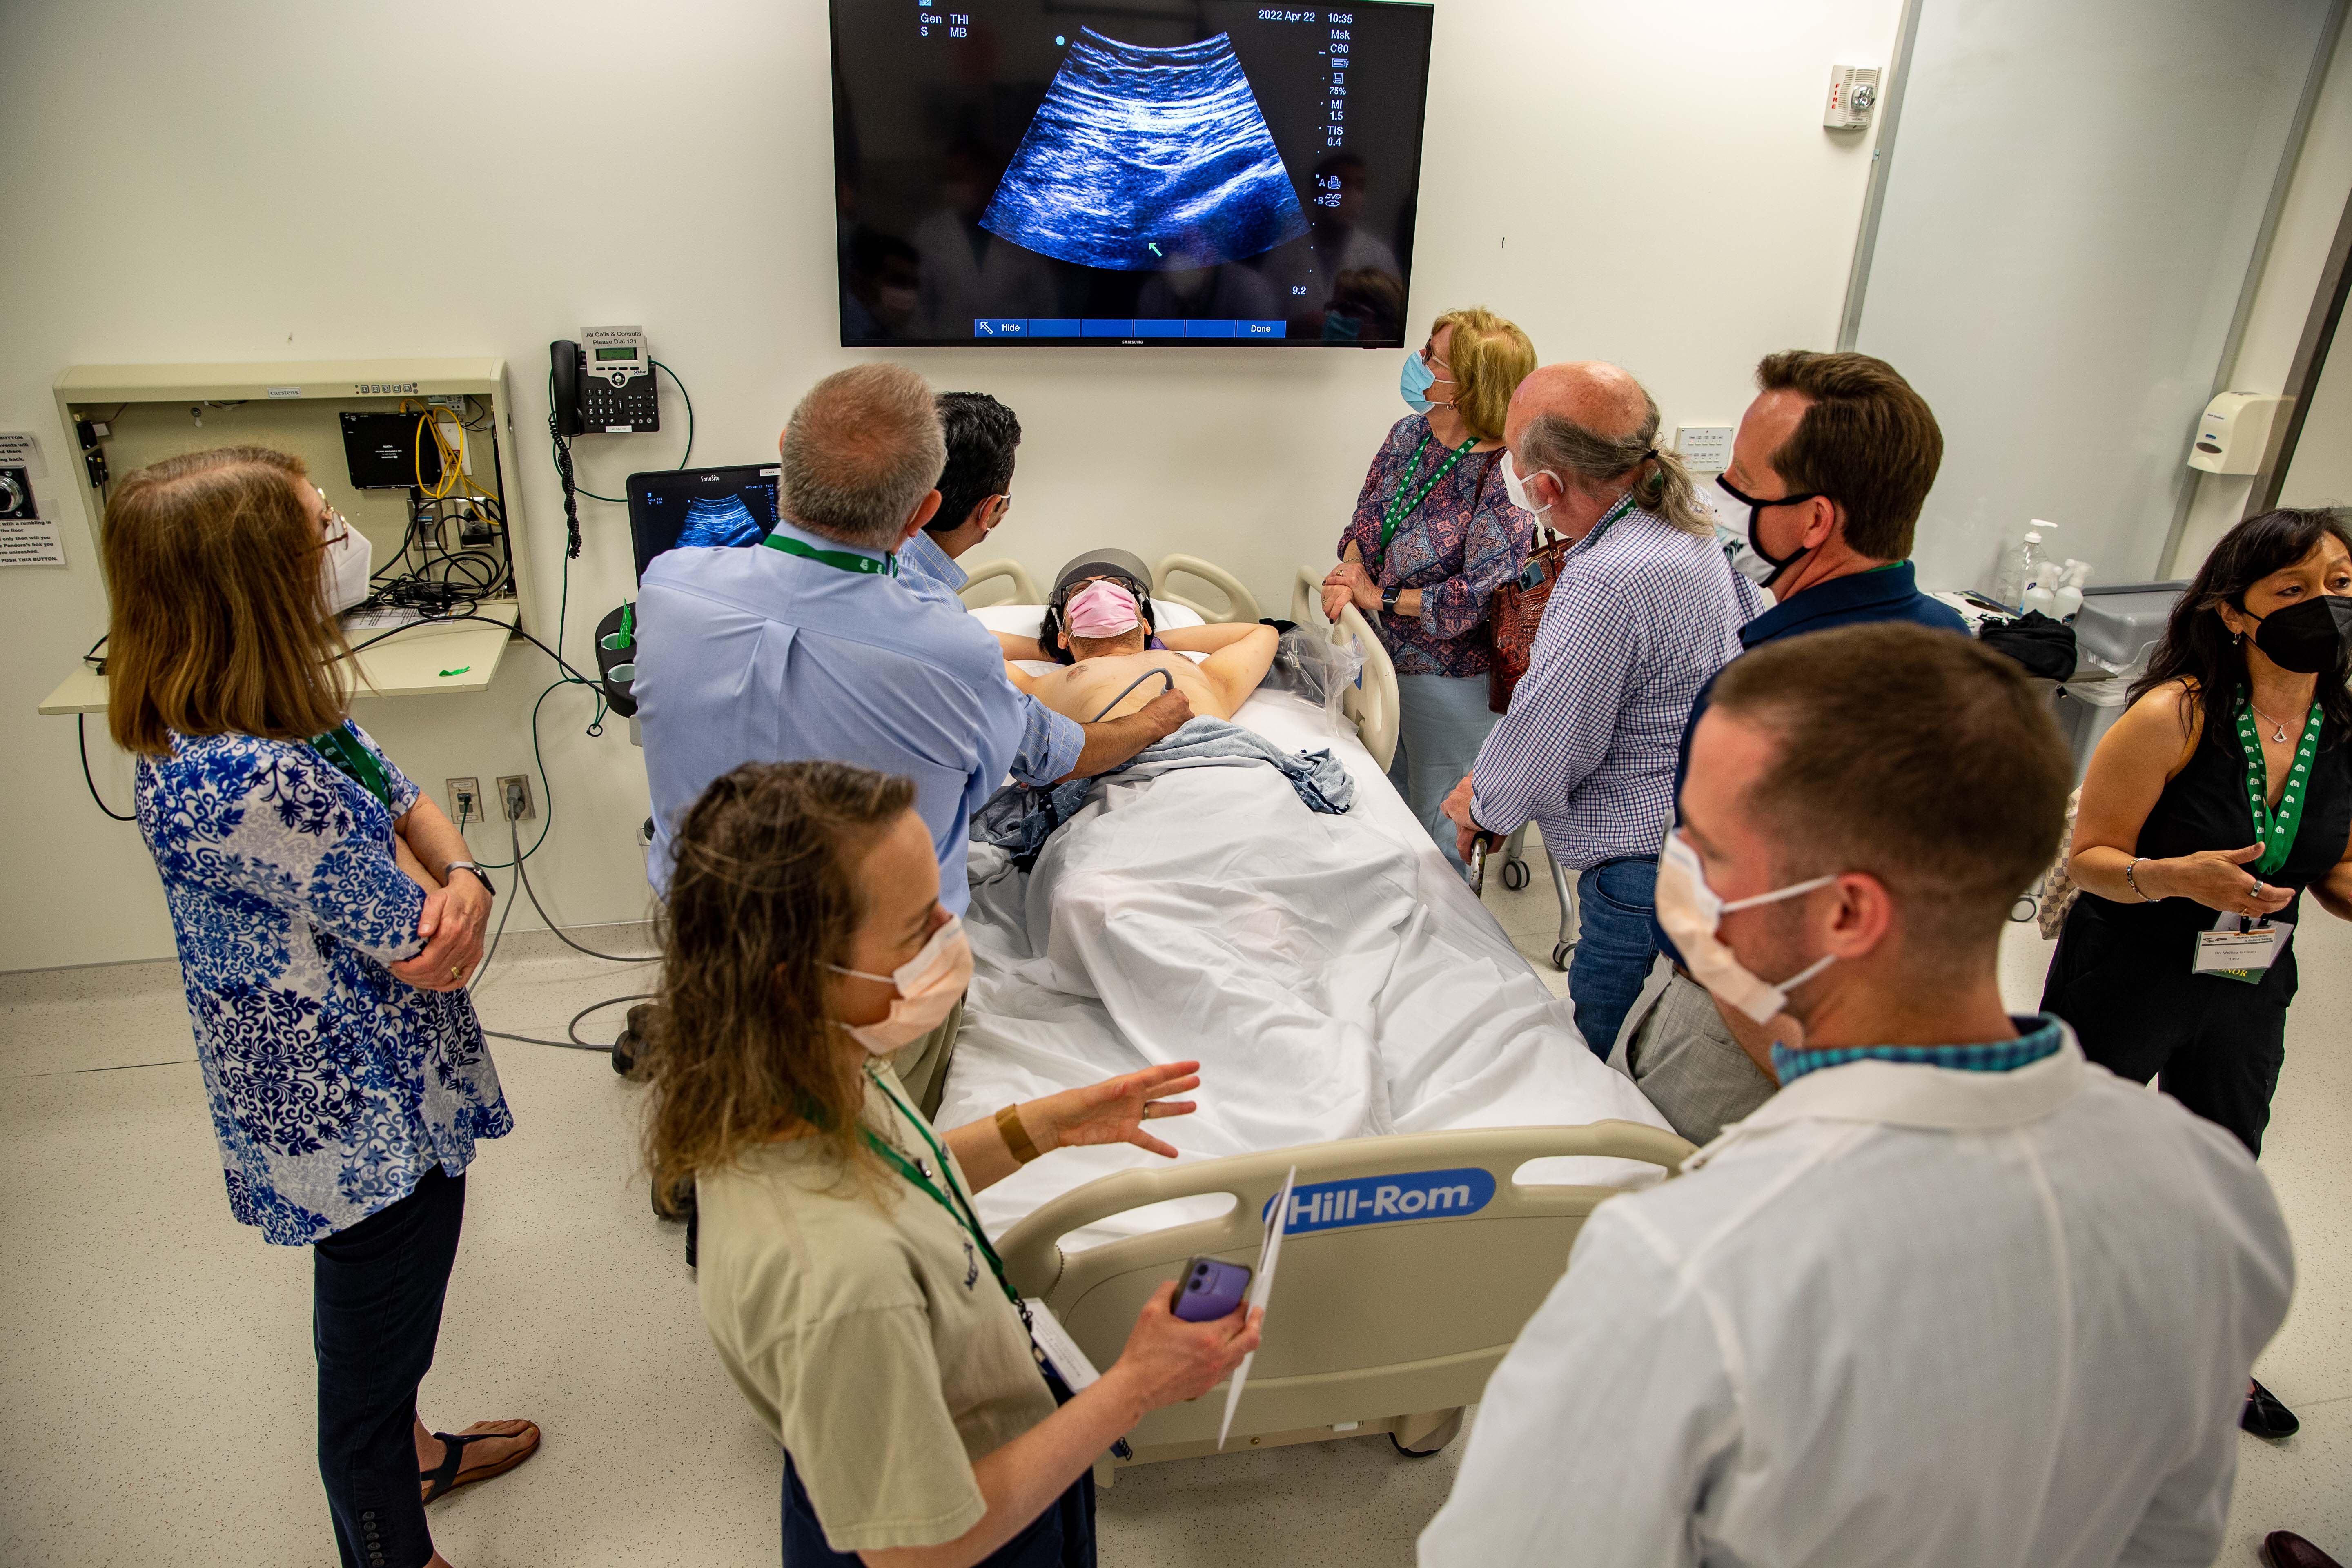  Alumni gather around standardized patient and ultrasound in simulation center 